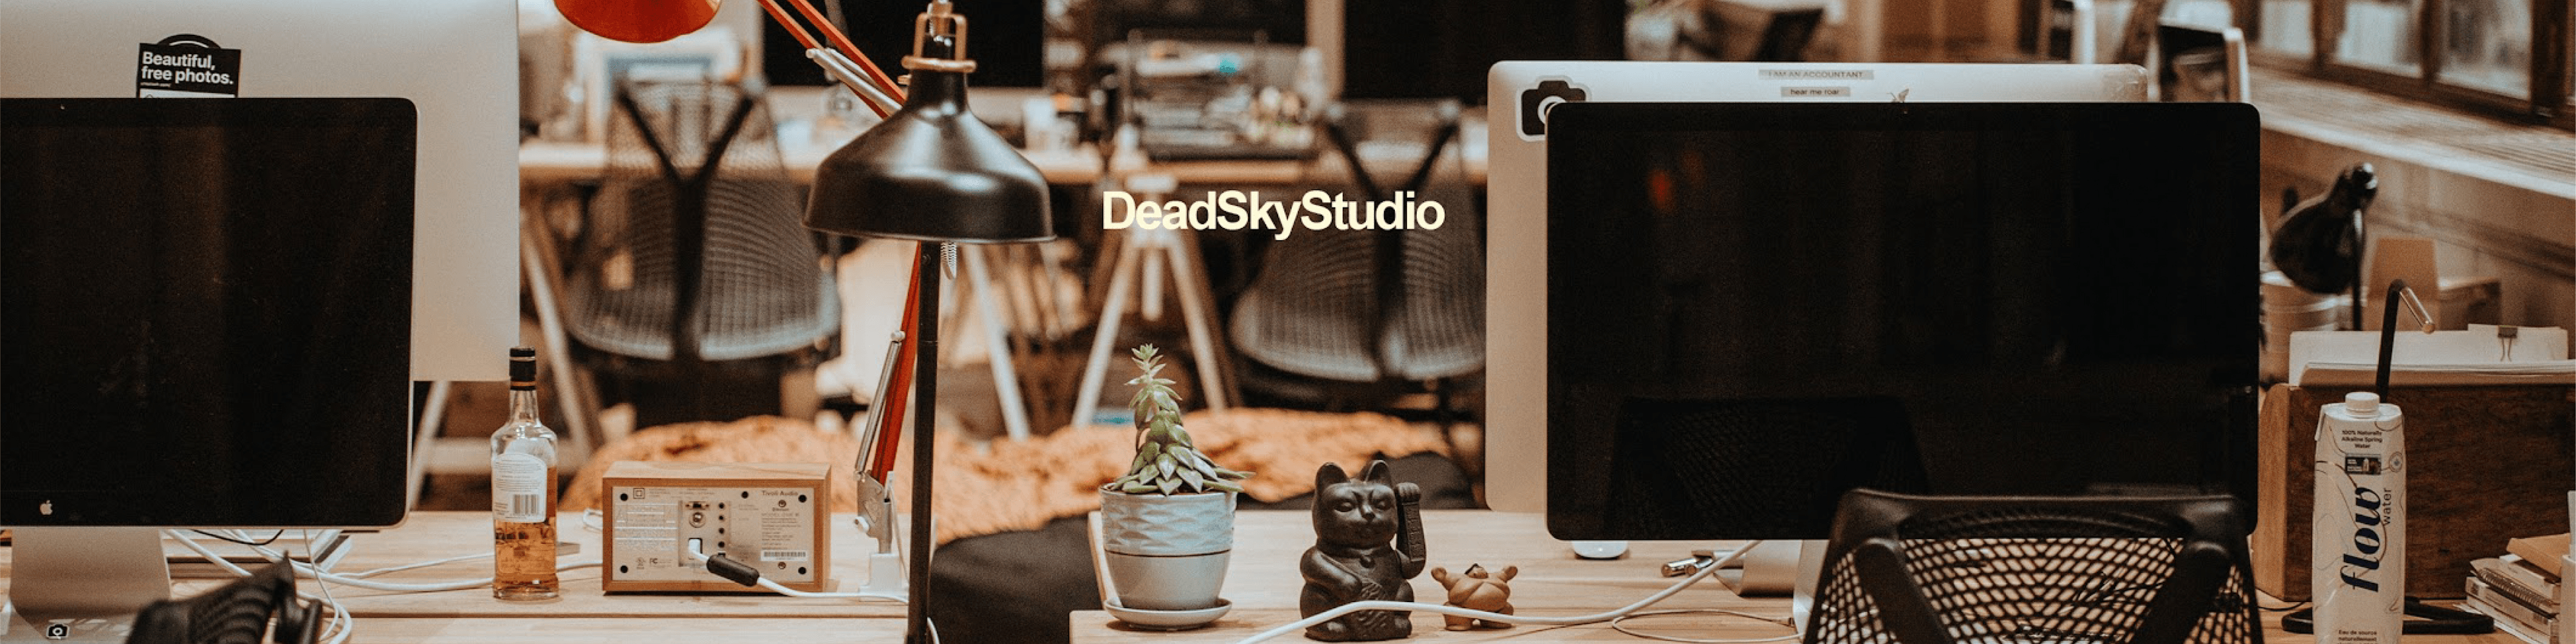 DeadSkyStudio バナー